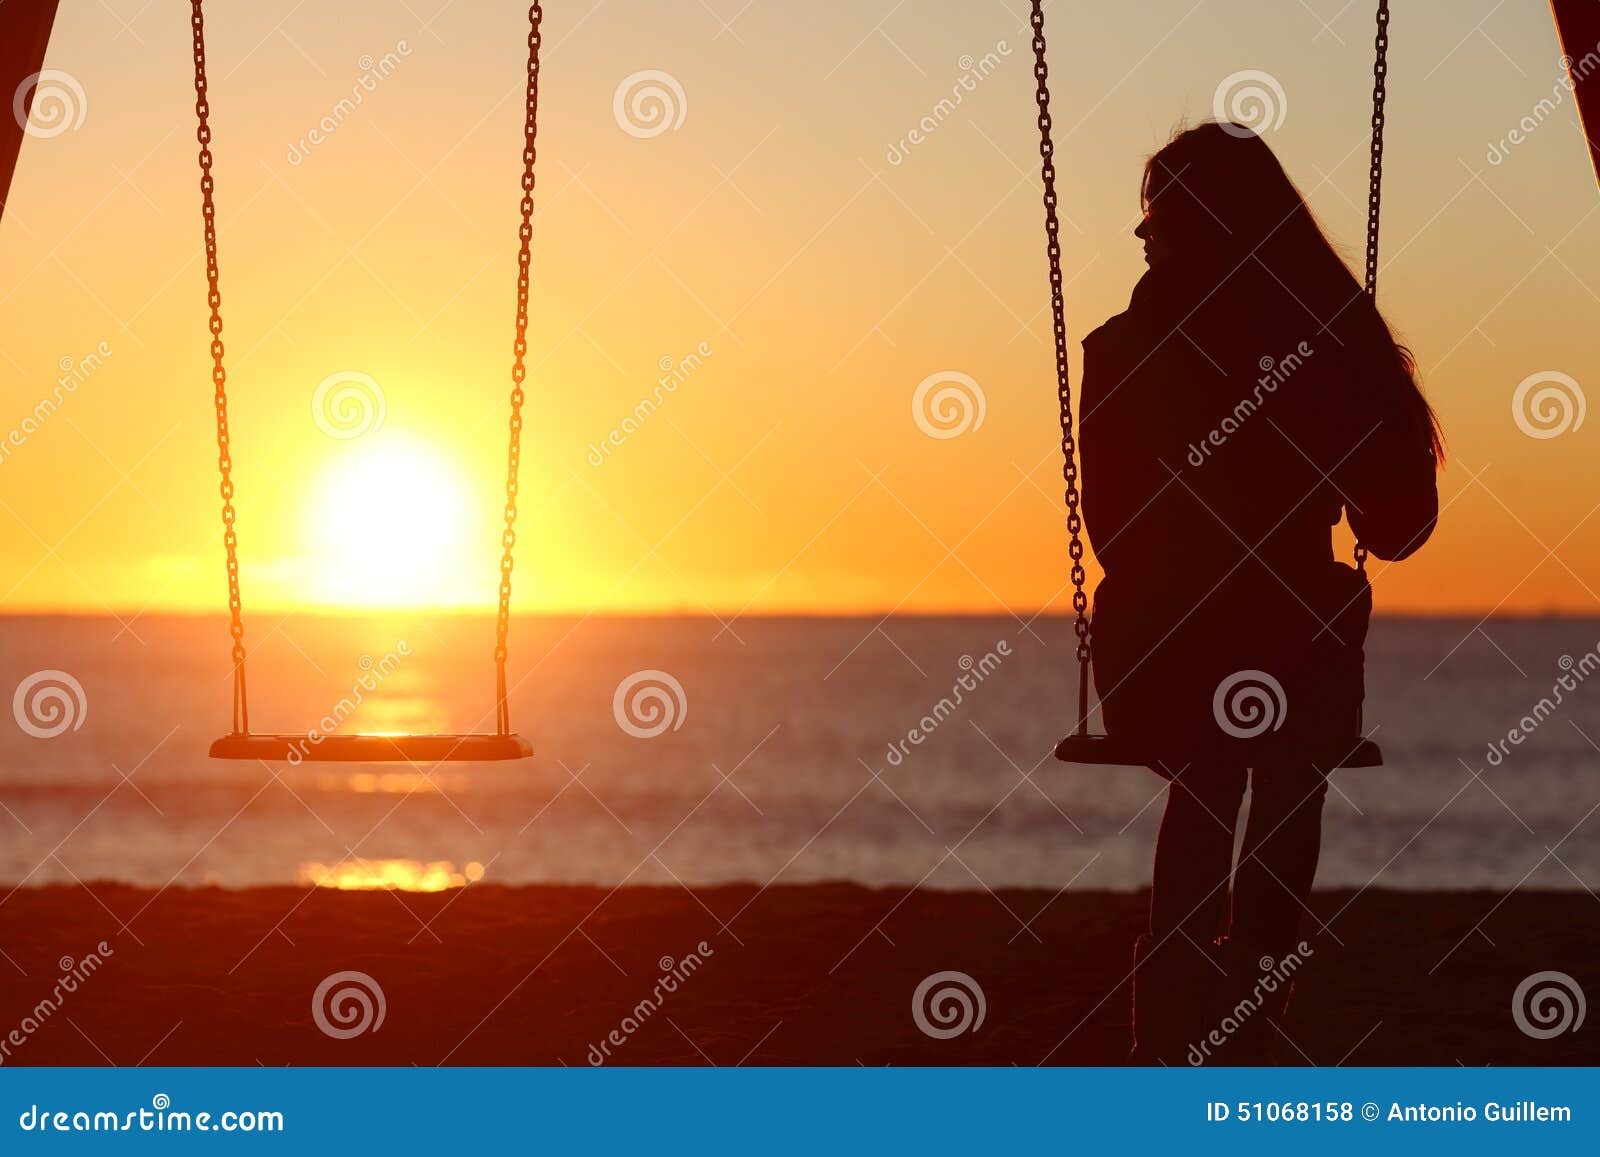 single woman alone swinging on the beach